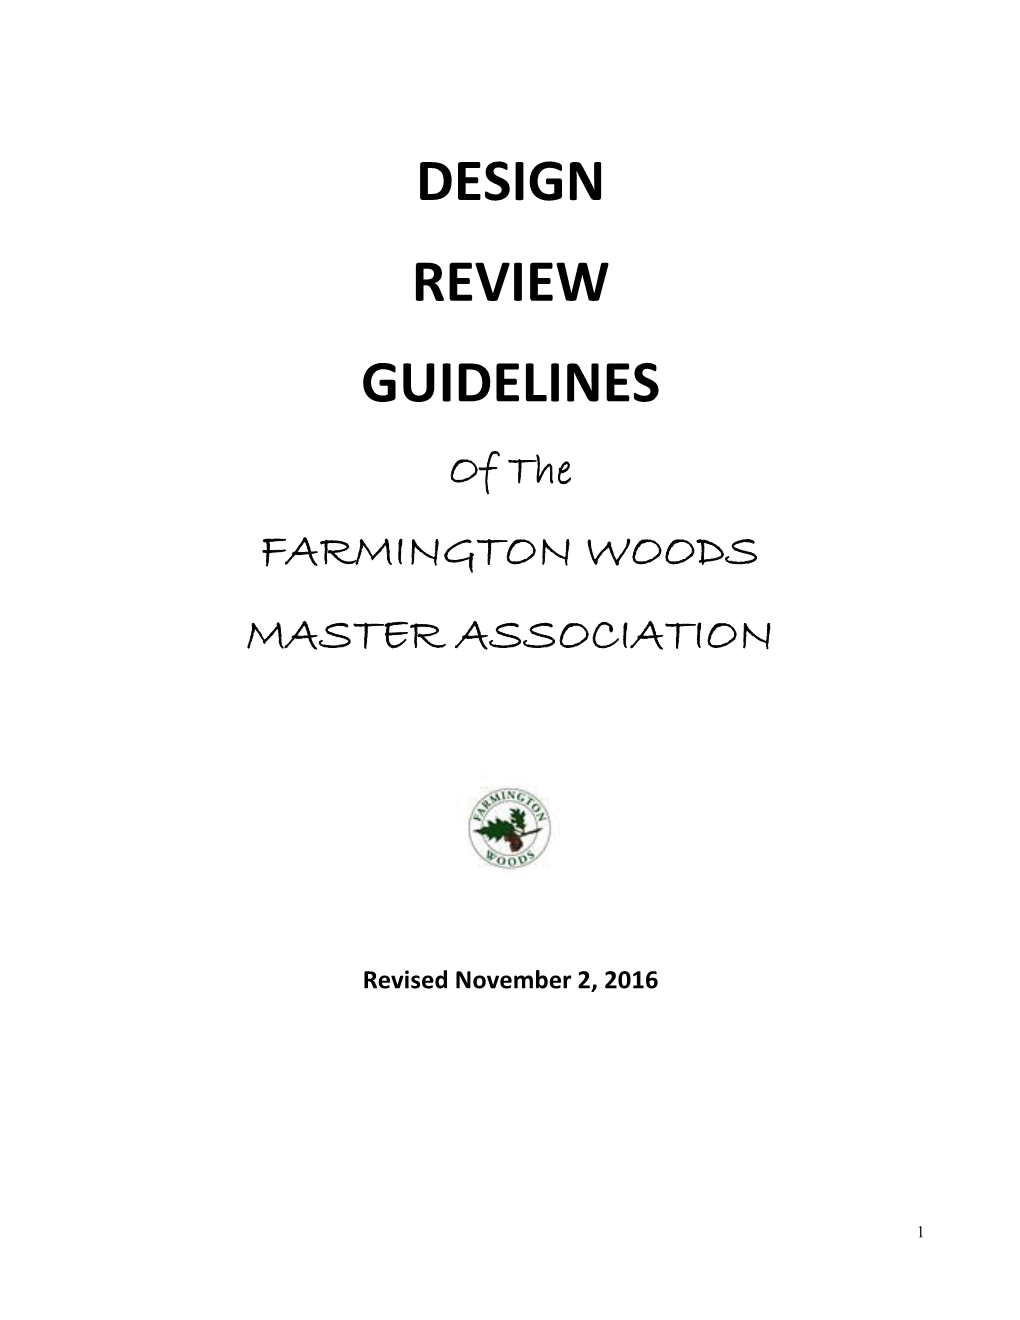 DESIGN REVIEW GUIDELINES of the FARMINGTON WOODS MASTER ASSOCIATION